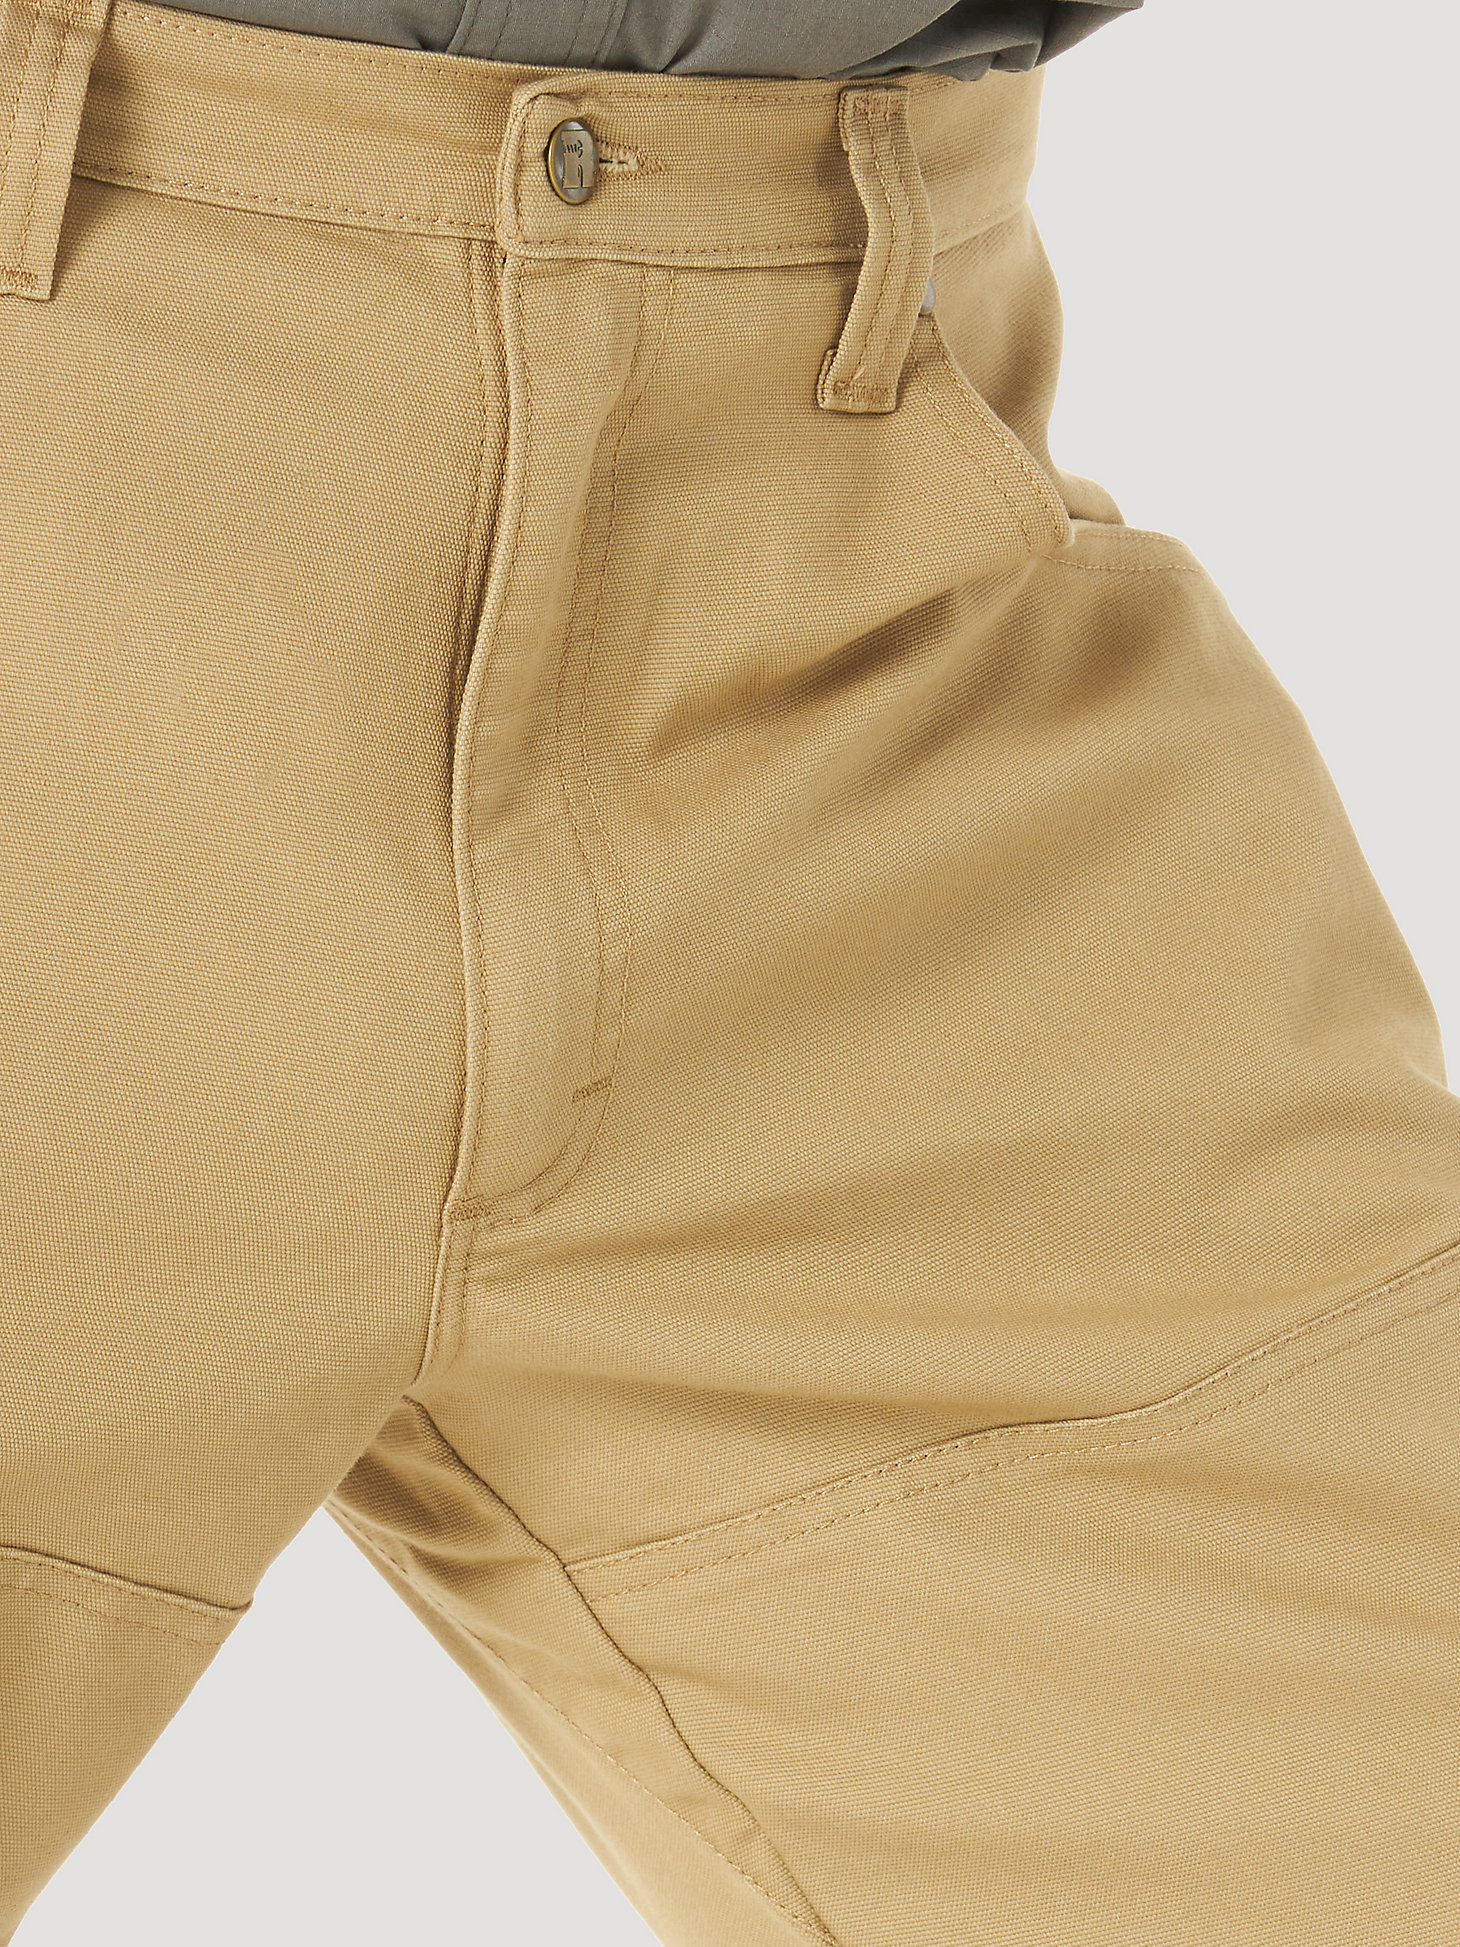 Wrangler® RIGGS Workwear® Straight Fit Work Pant in Golden Khaki alternative view 7